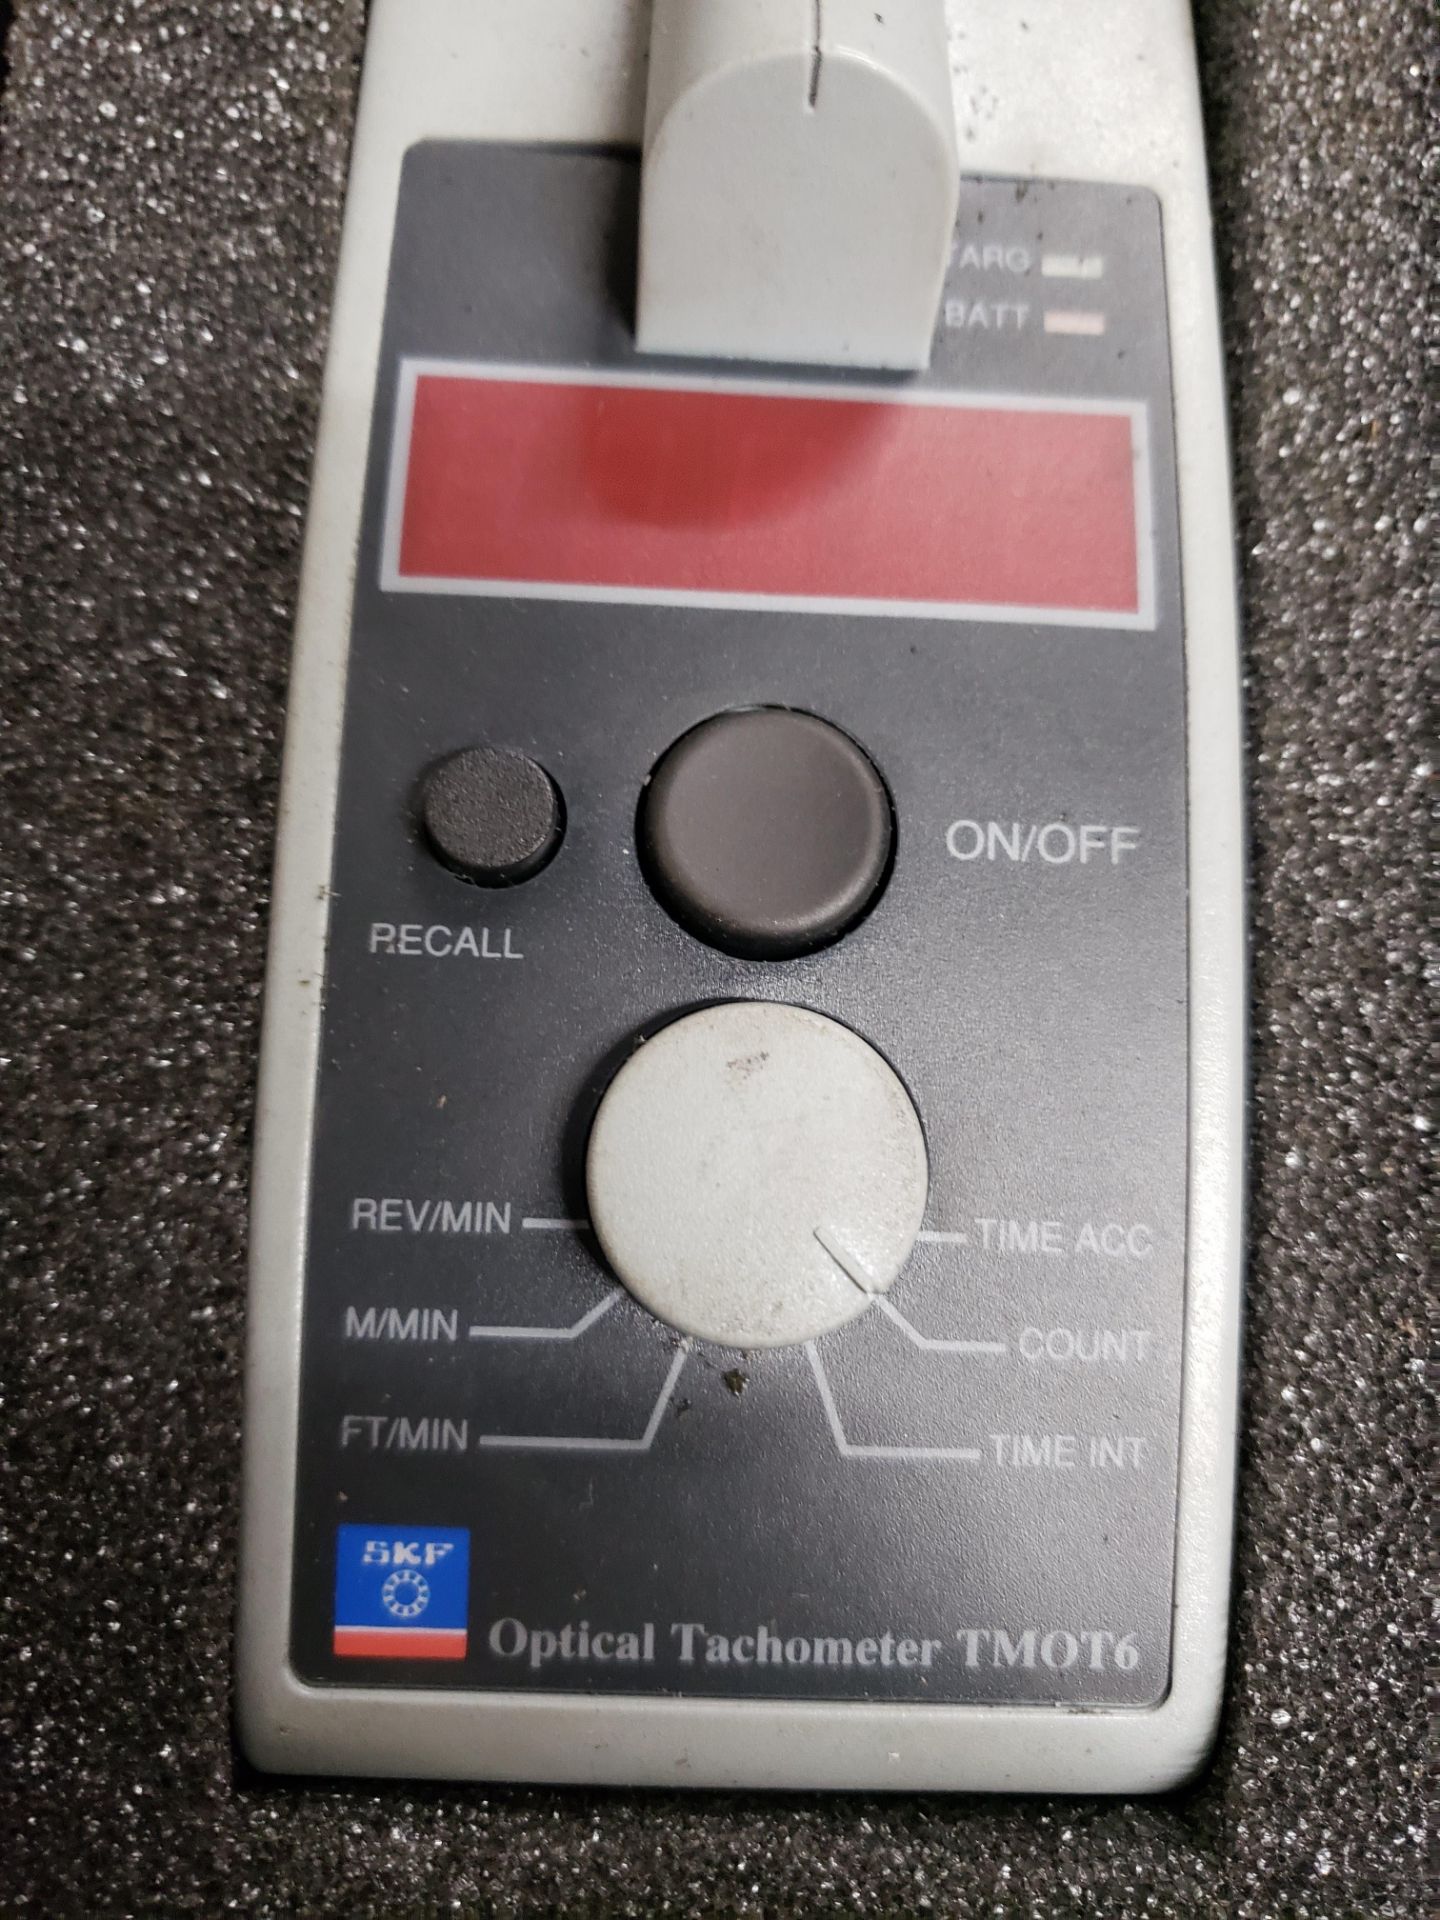 SKF optical tachometer TMOT6 - Image 3 of 4